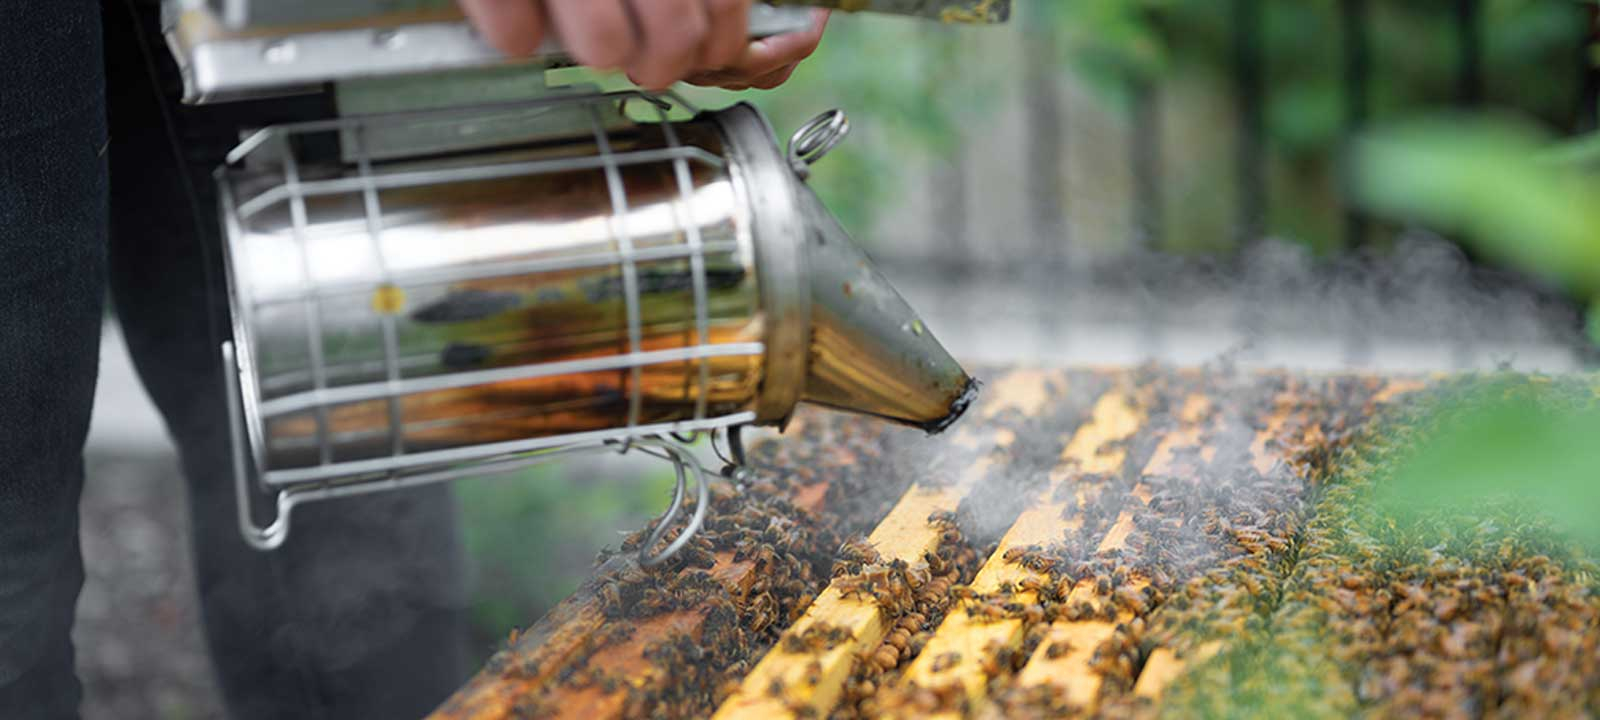 A beekeeper smokes the beehive to calm honeybees.